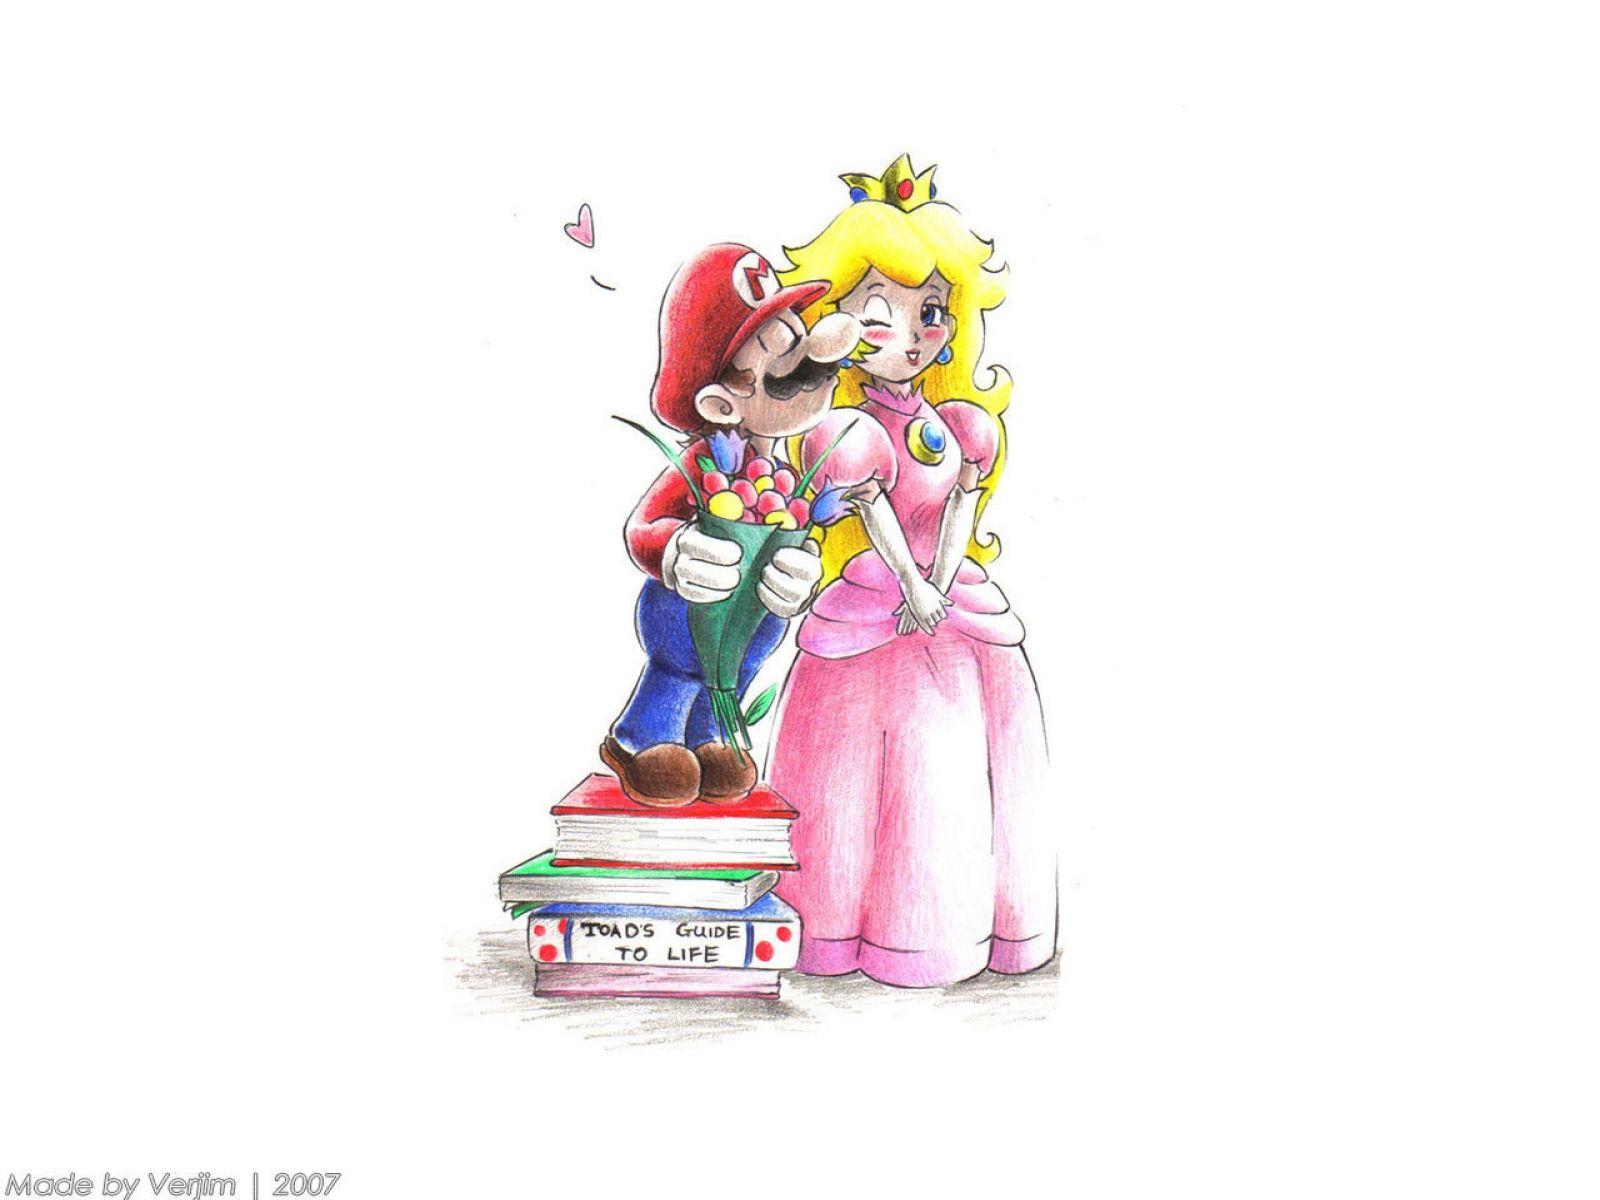 Mario and Princess Peach Wallpaper